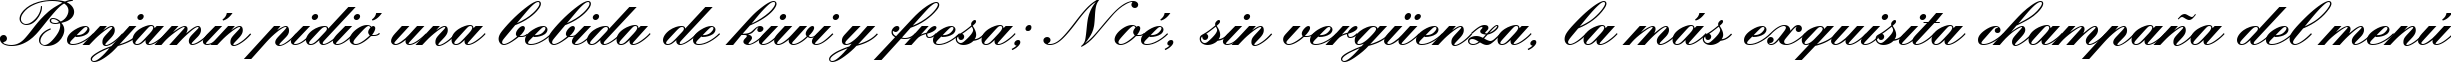 Пример написания шрифтом KunstlerschreibschDBol текста на испанском